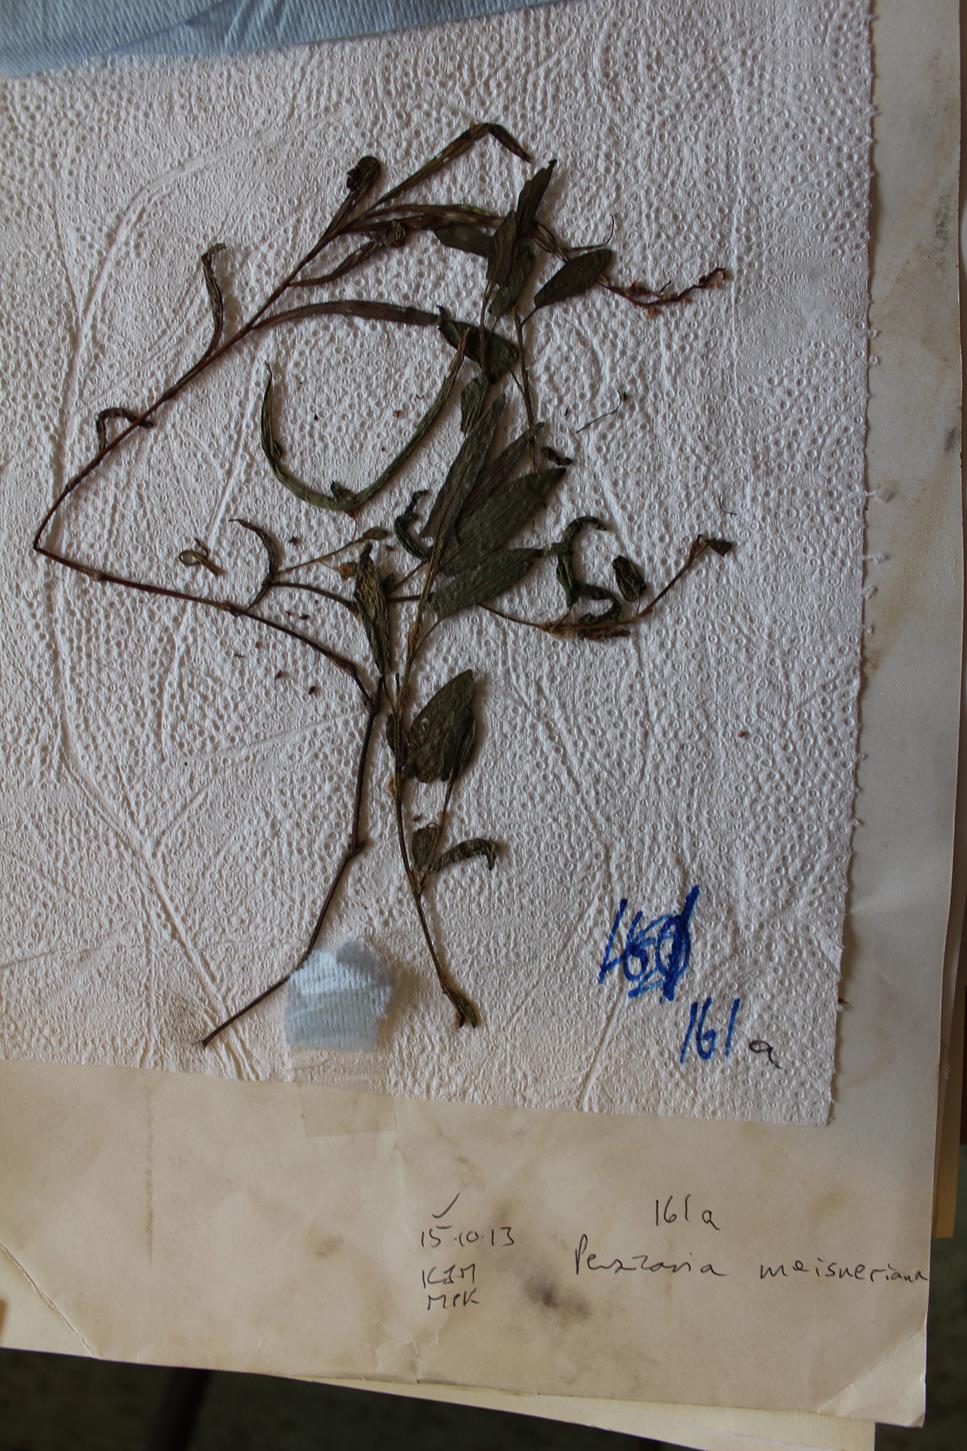 Persicaria meisneriana var. beyrichiana